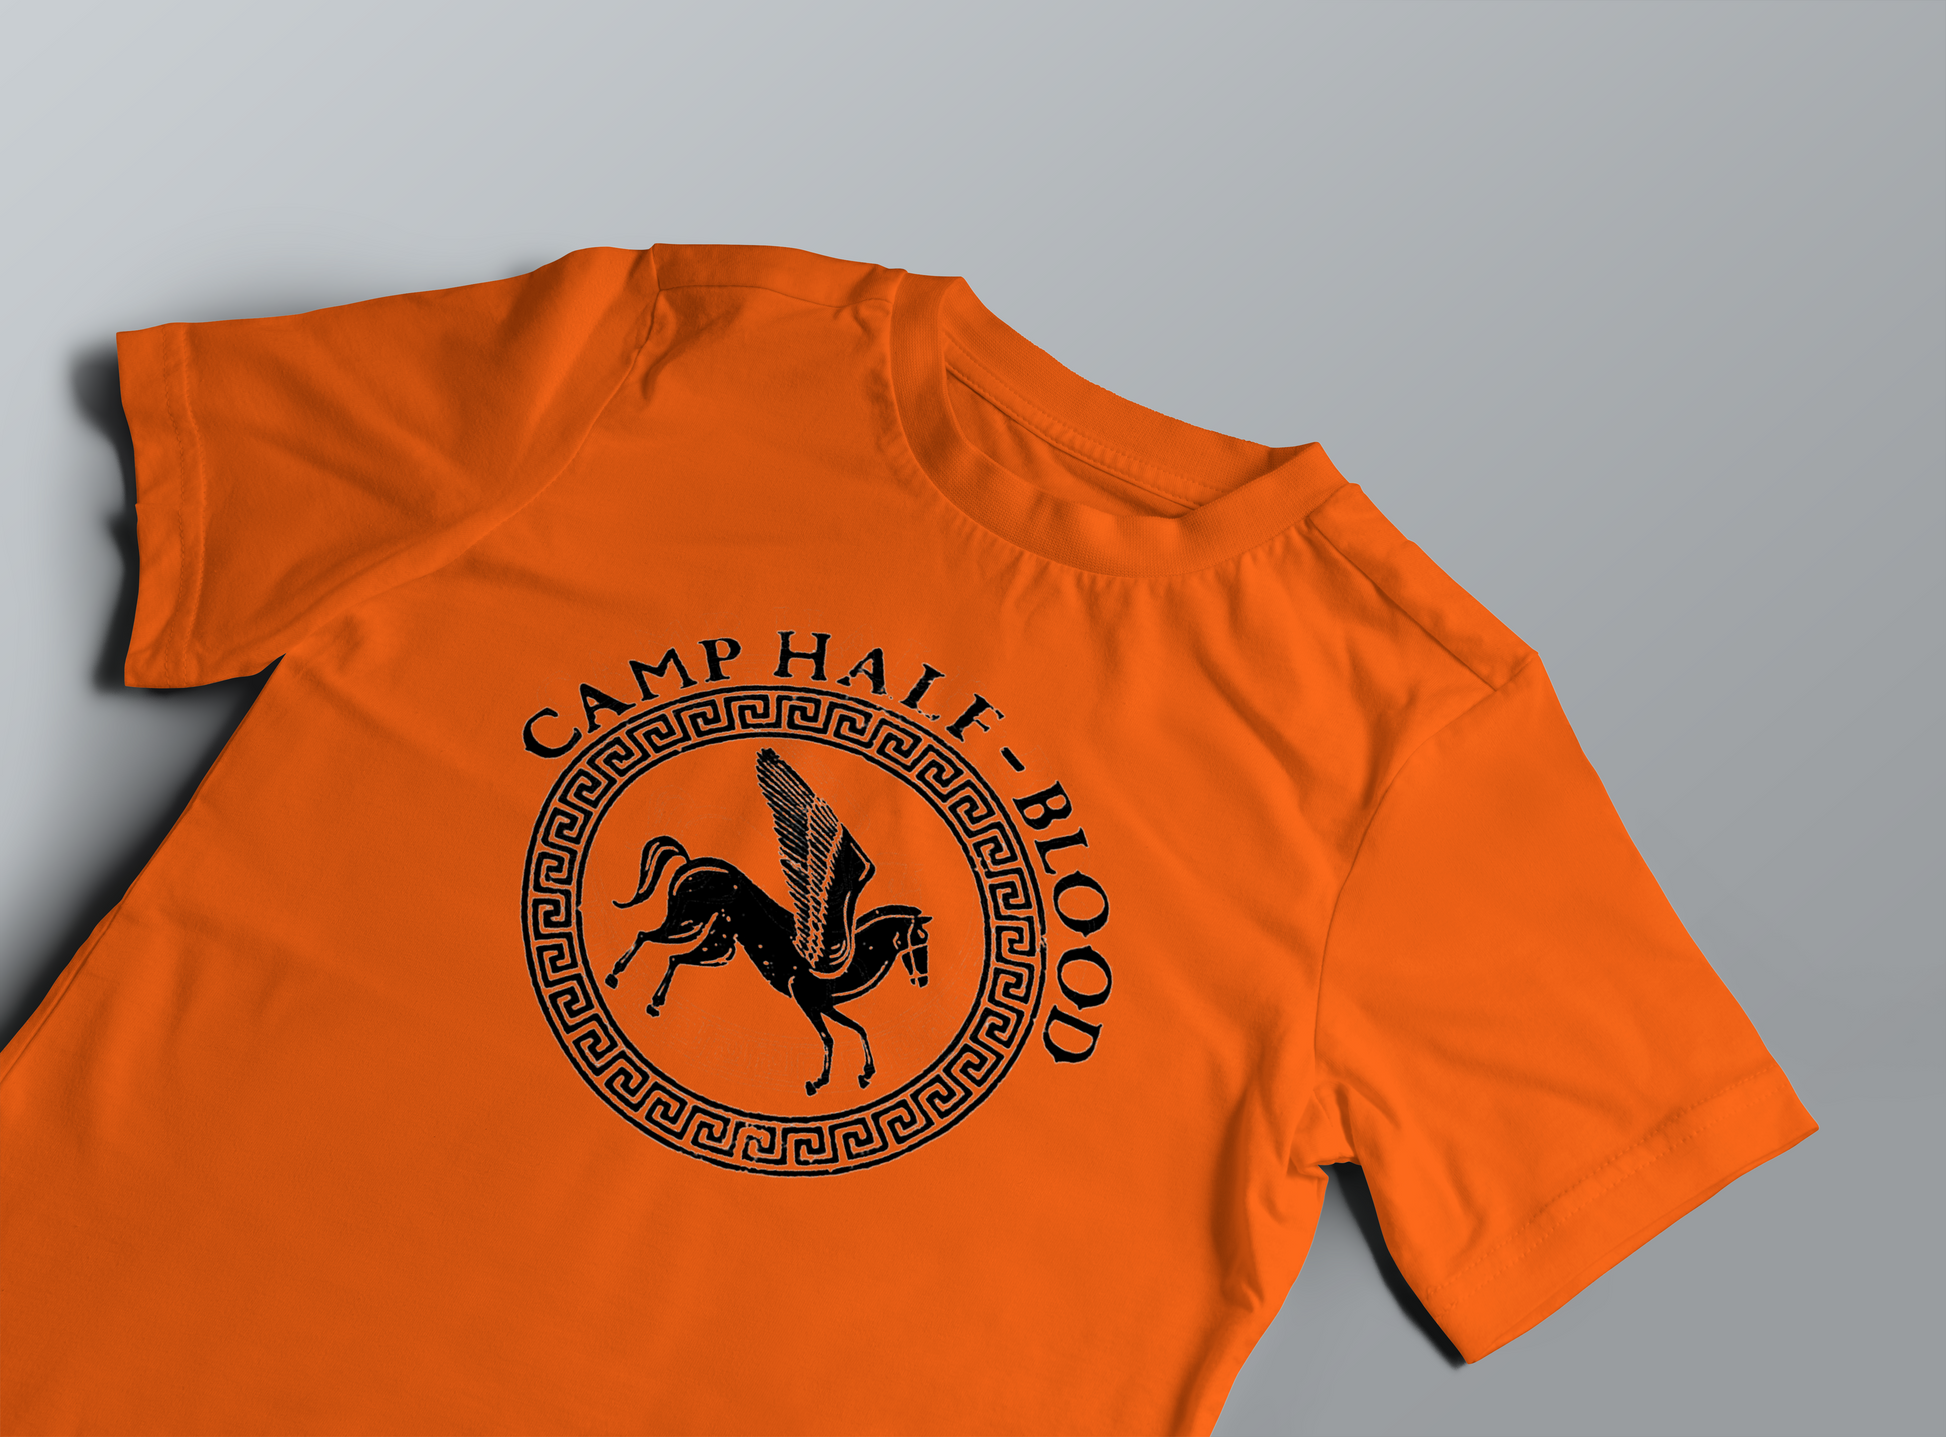 Camiseta Camp Half-blood